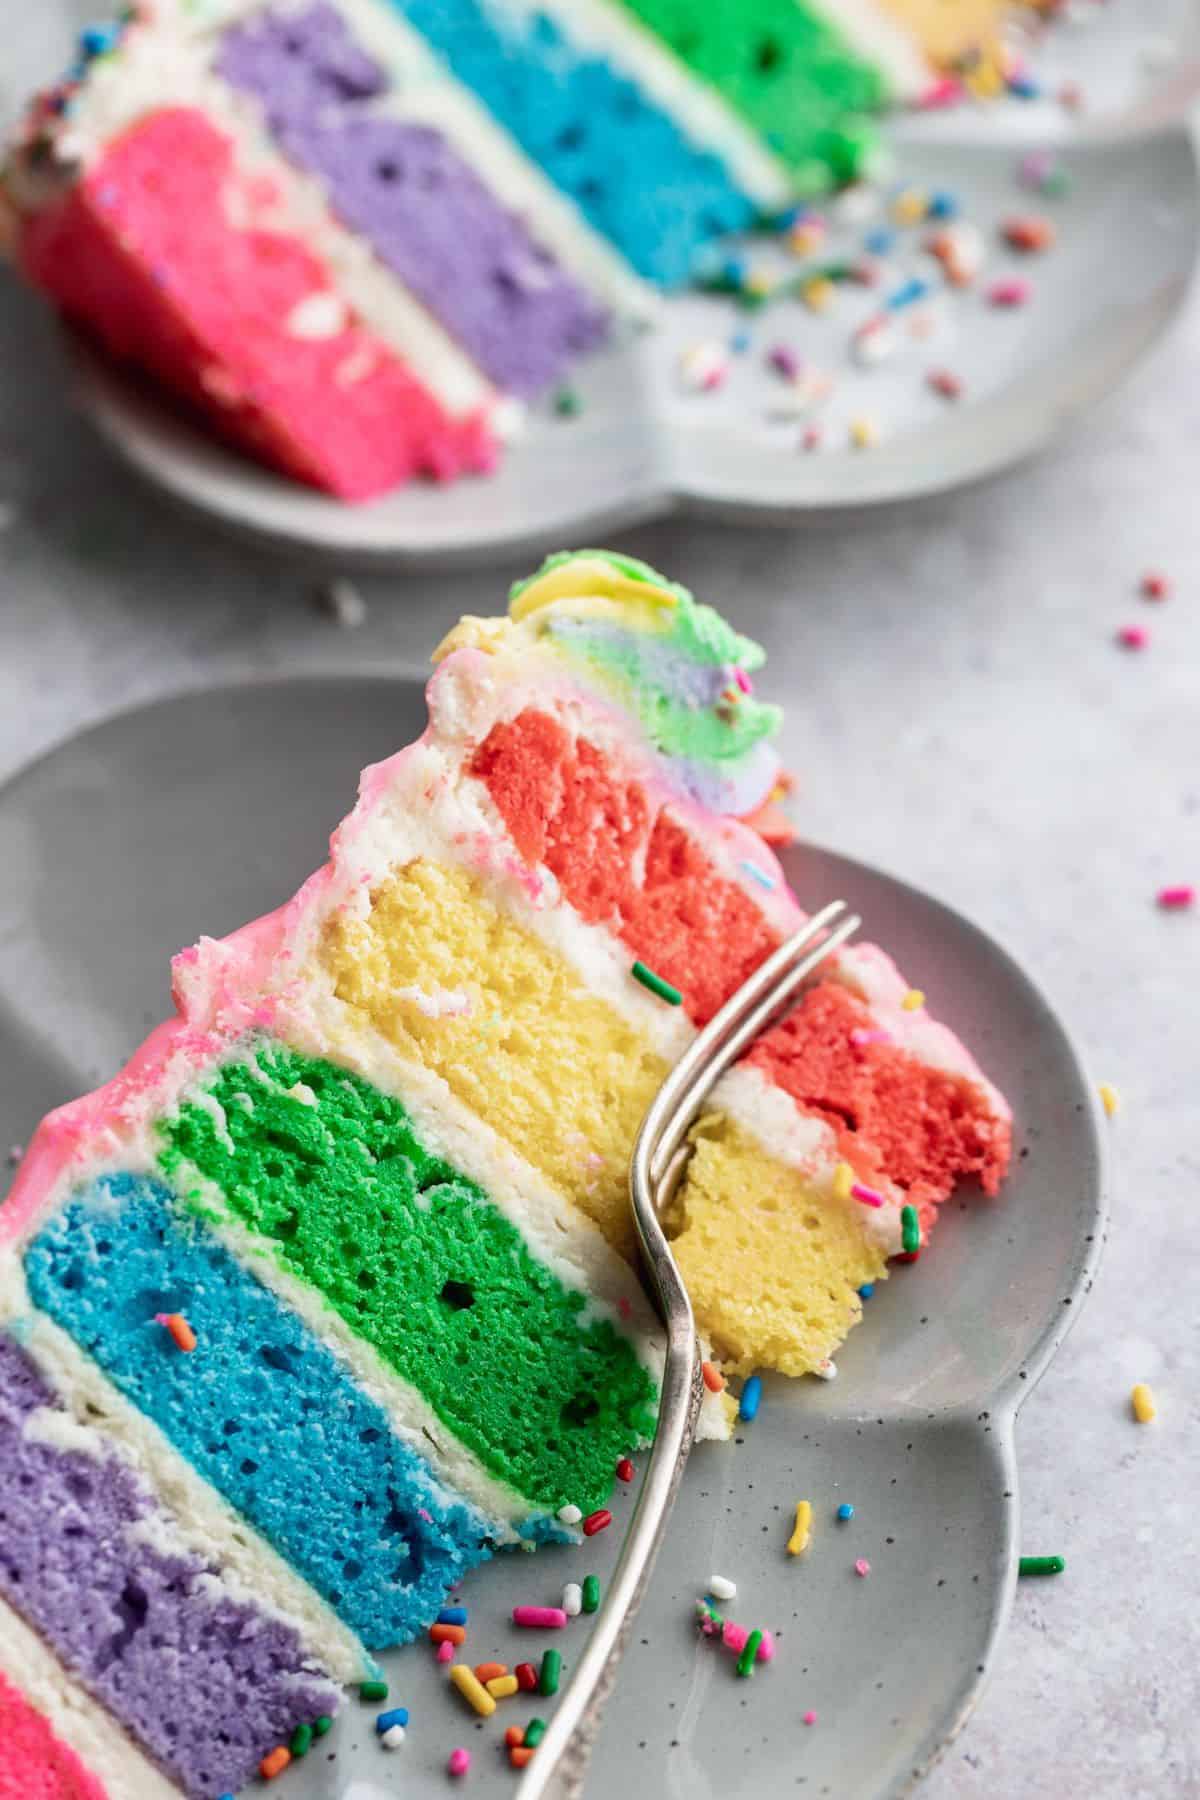 Fork inserted into birthday rainbow cake.